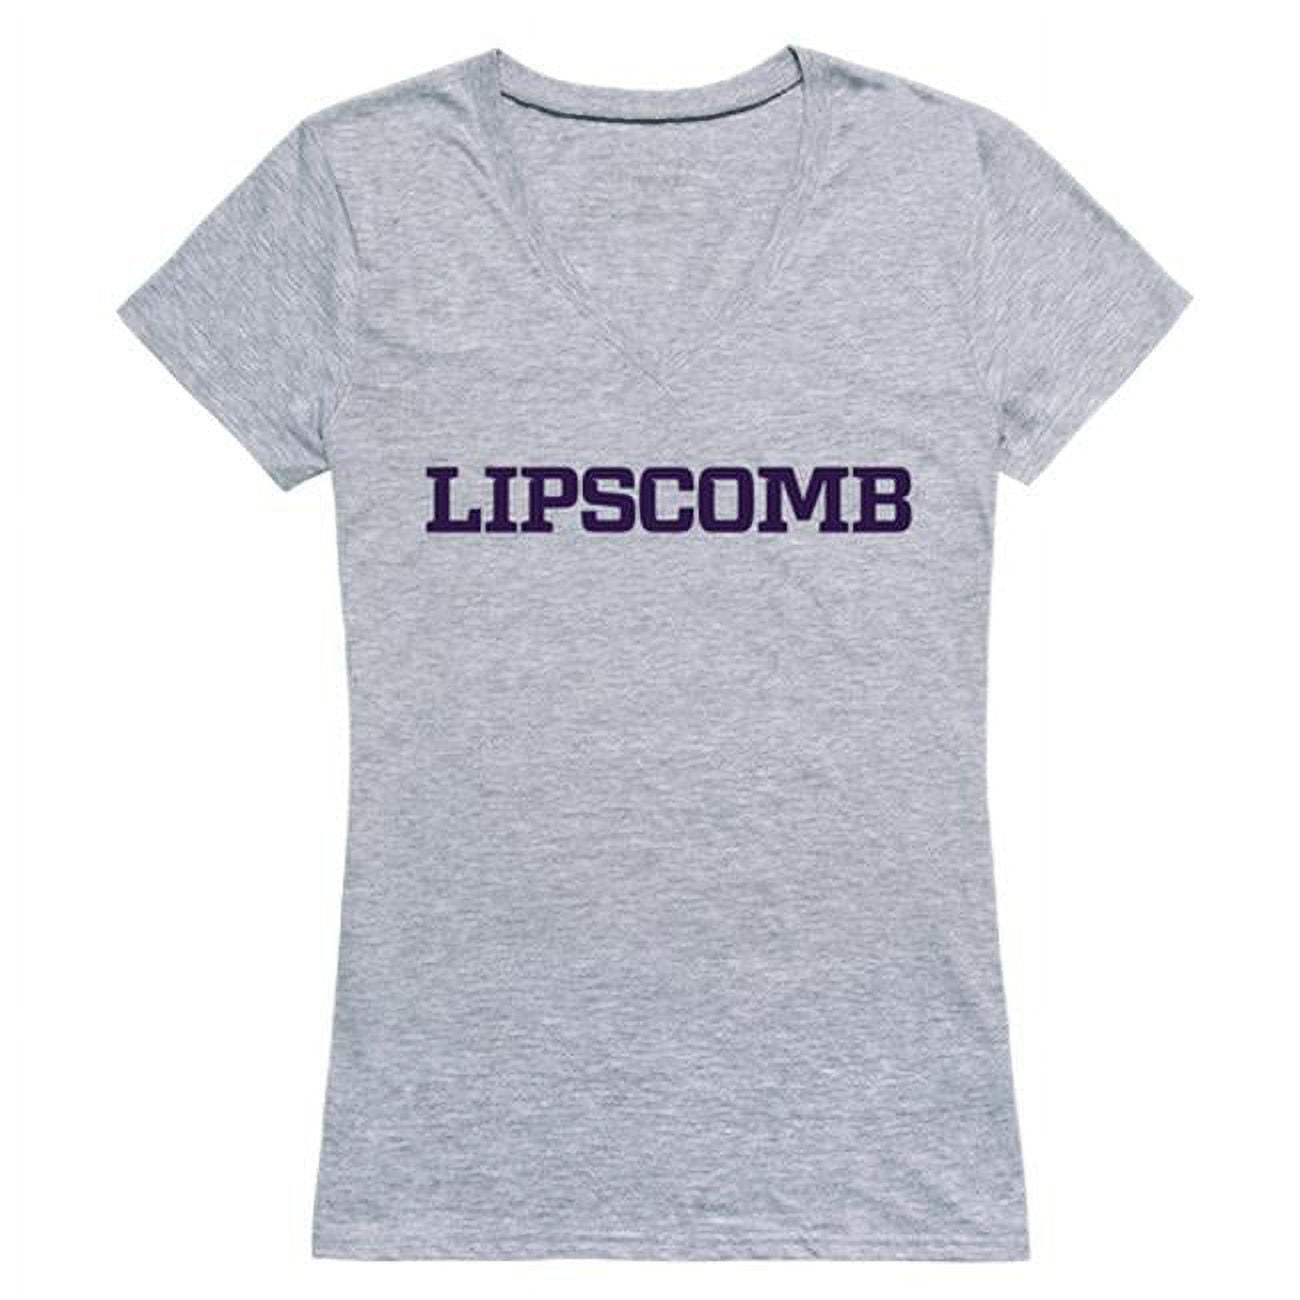 W Republic 520-328-H08-01 Lipscomb University Seal T-Shirt for Women,  Heather Grey - Small 